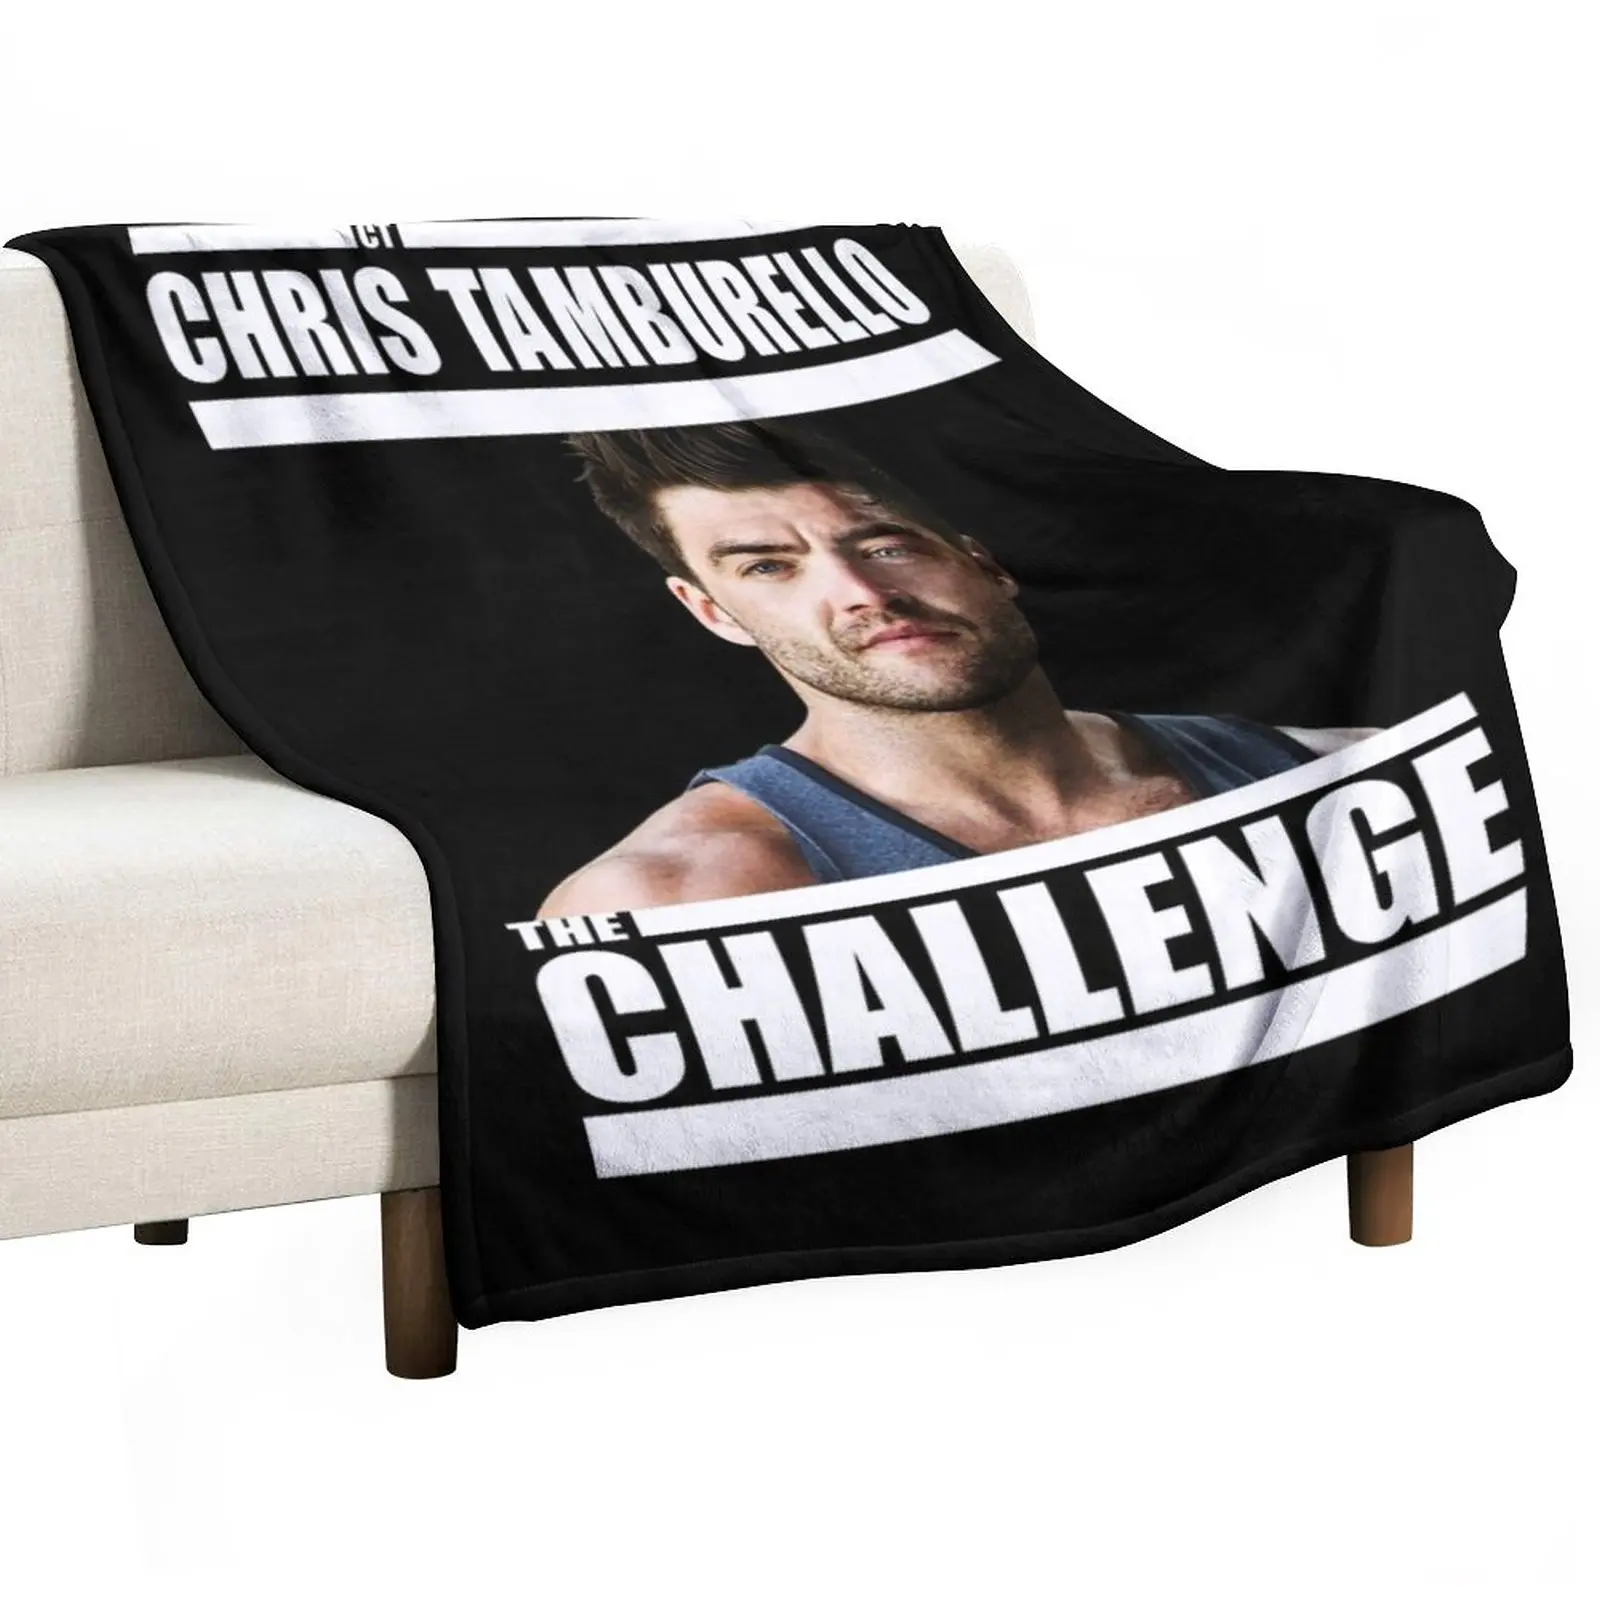 

The Challenge Ct Shirt Throw Blanket Designer Blankets Furry Blanket Hair Blanket